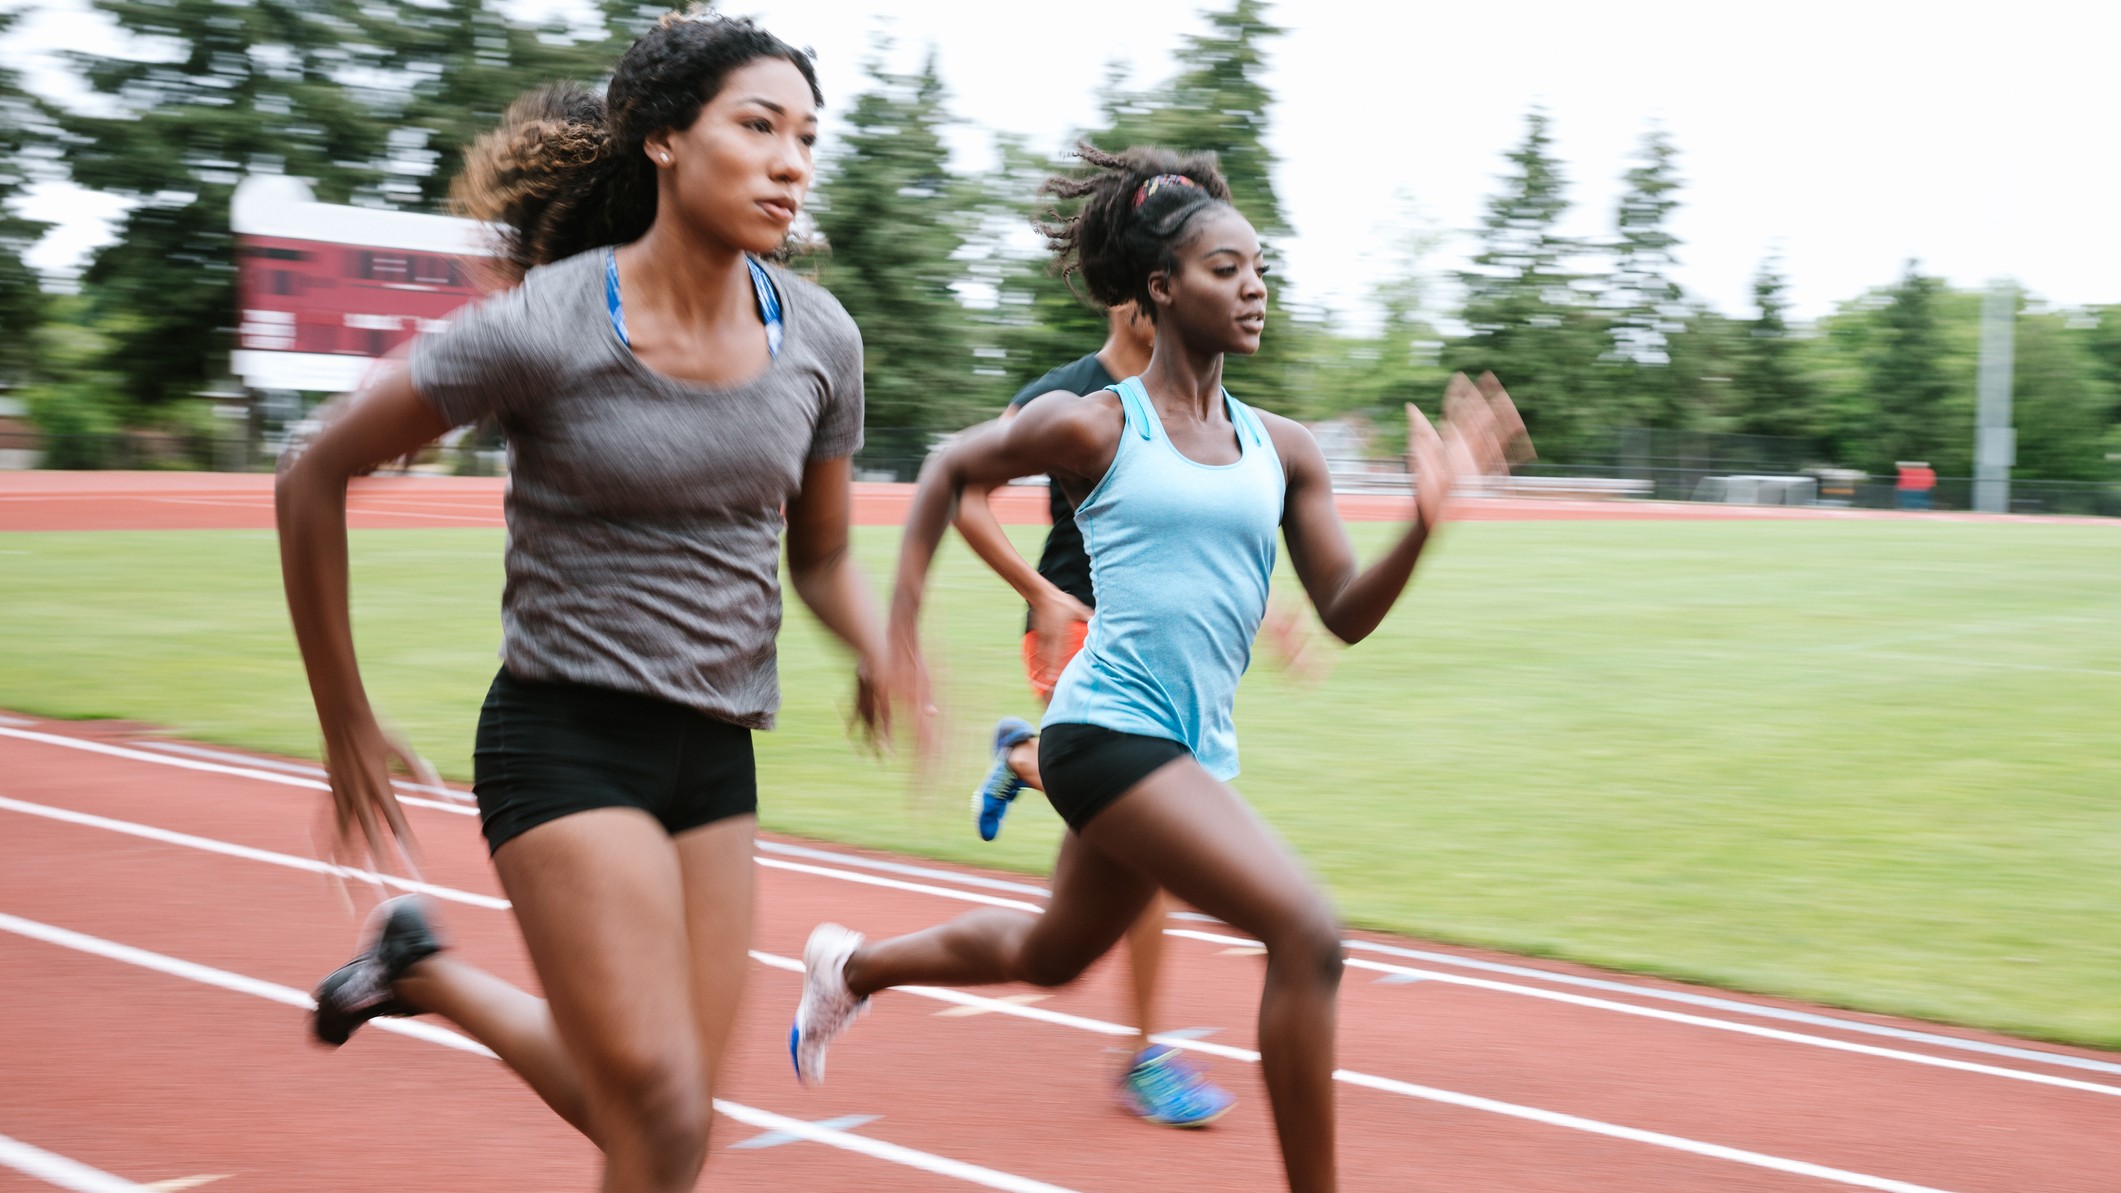 Women are running on a running track